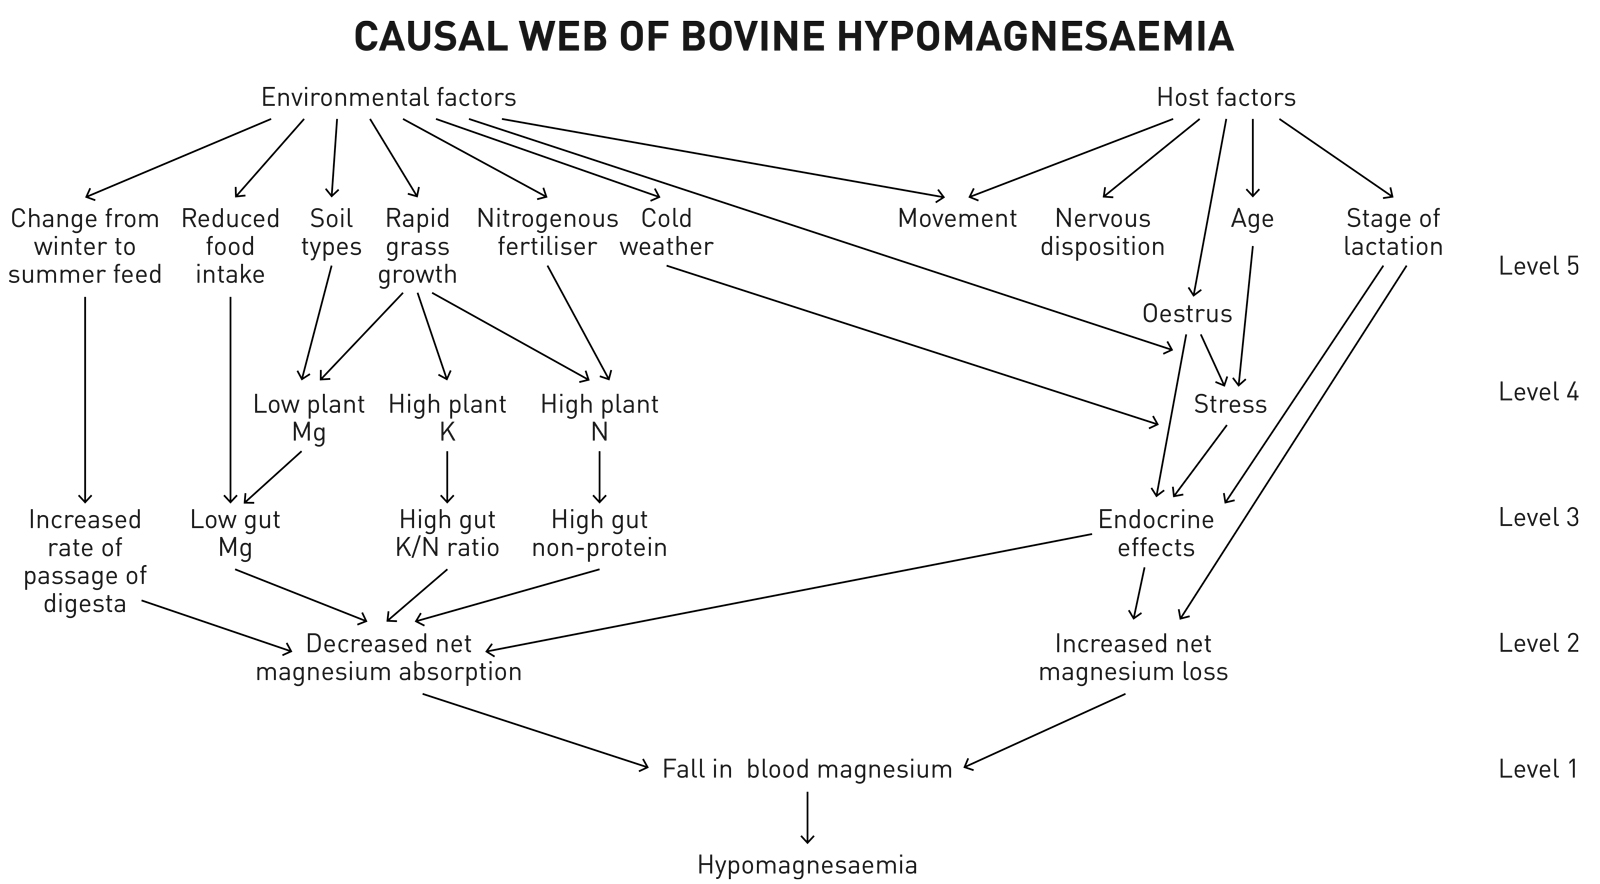 Hypomagnesia-causal-web.jpg